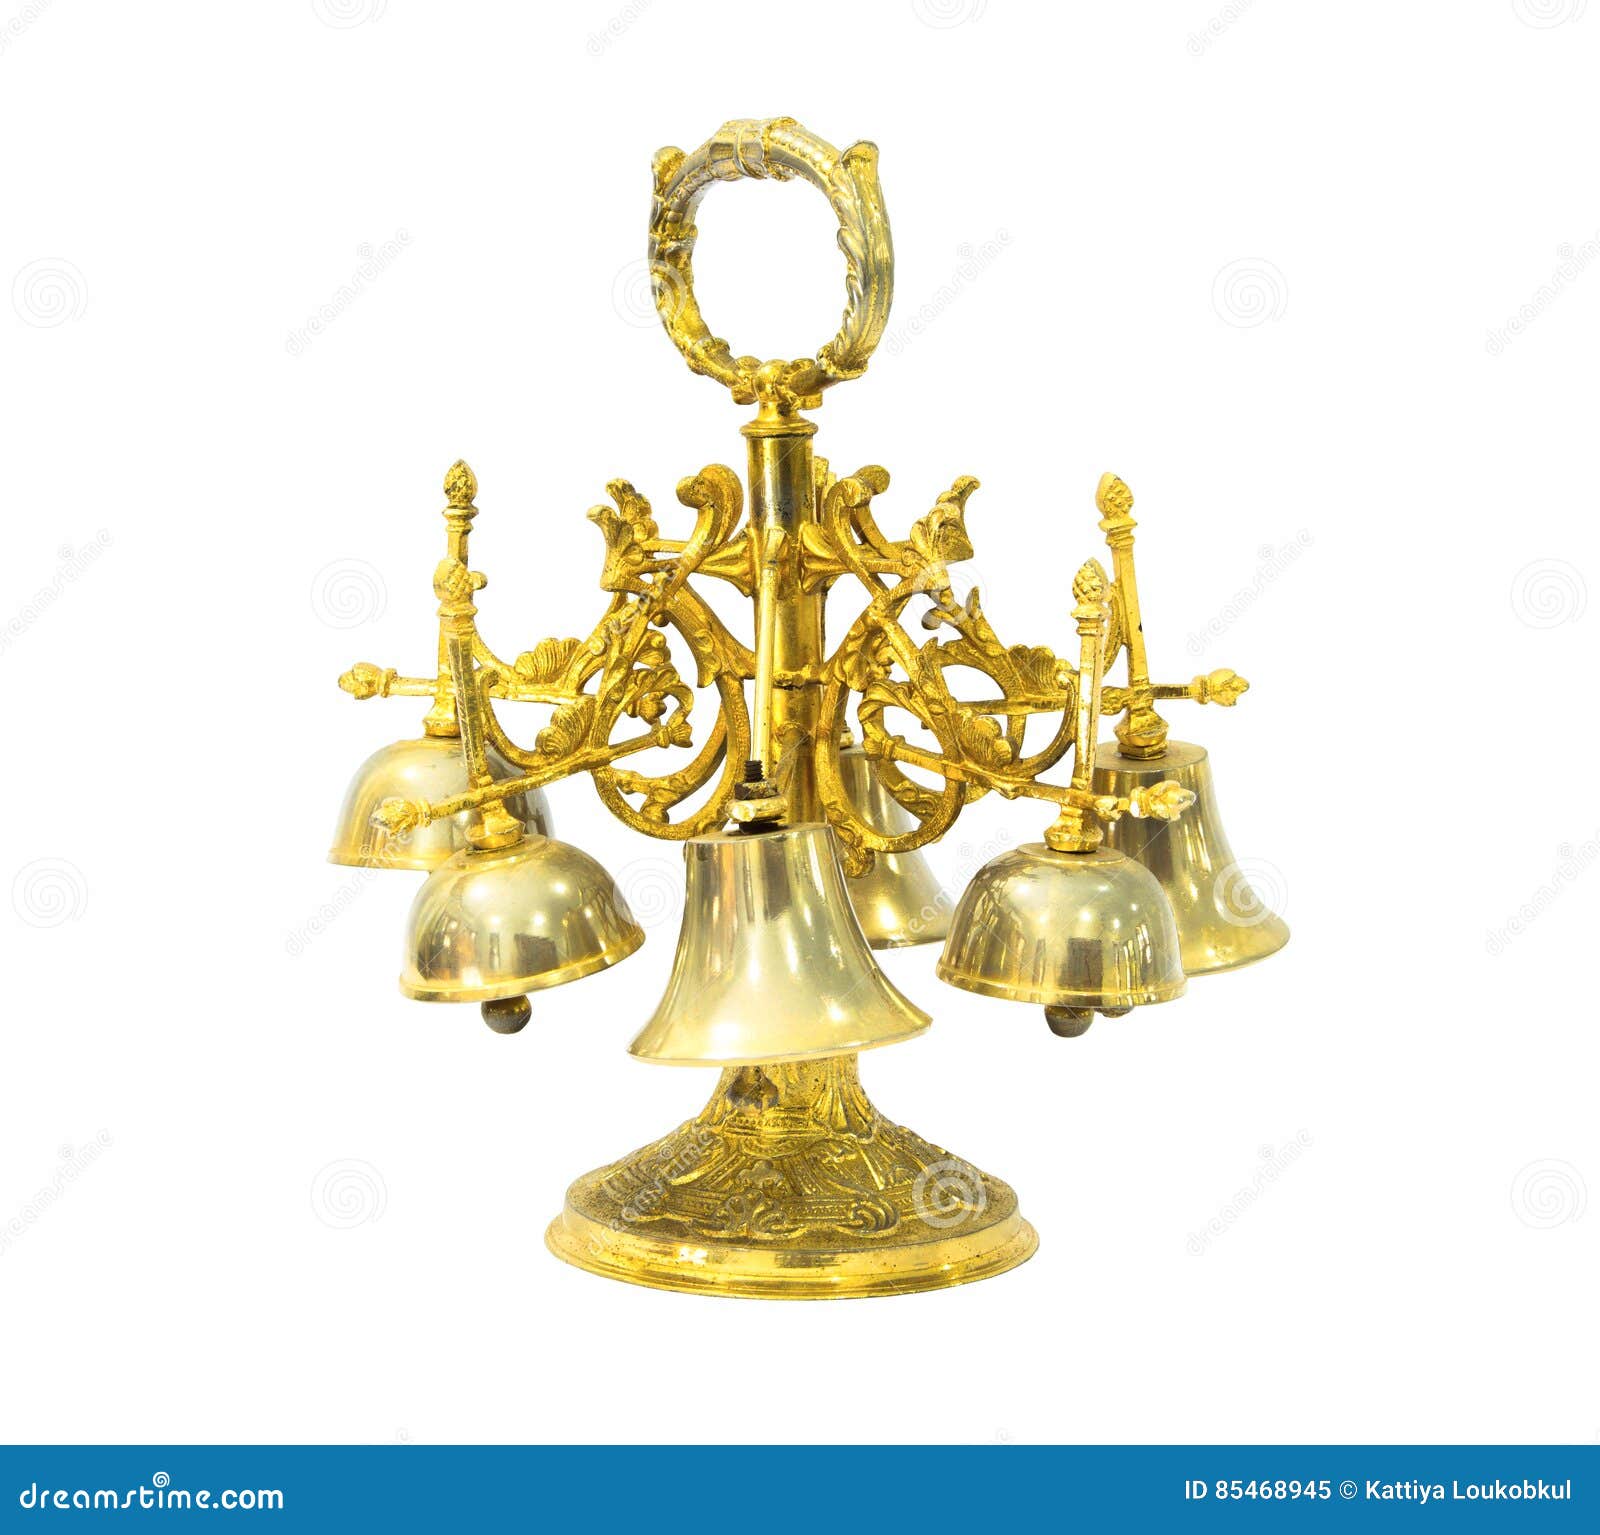 set of gold handbells on white background